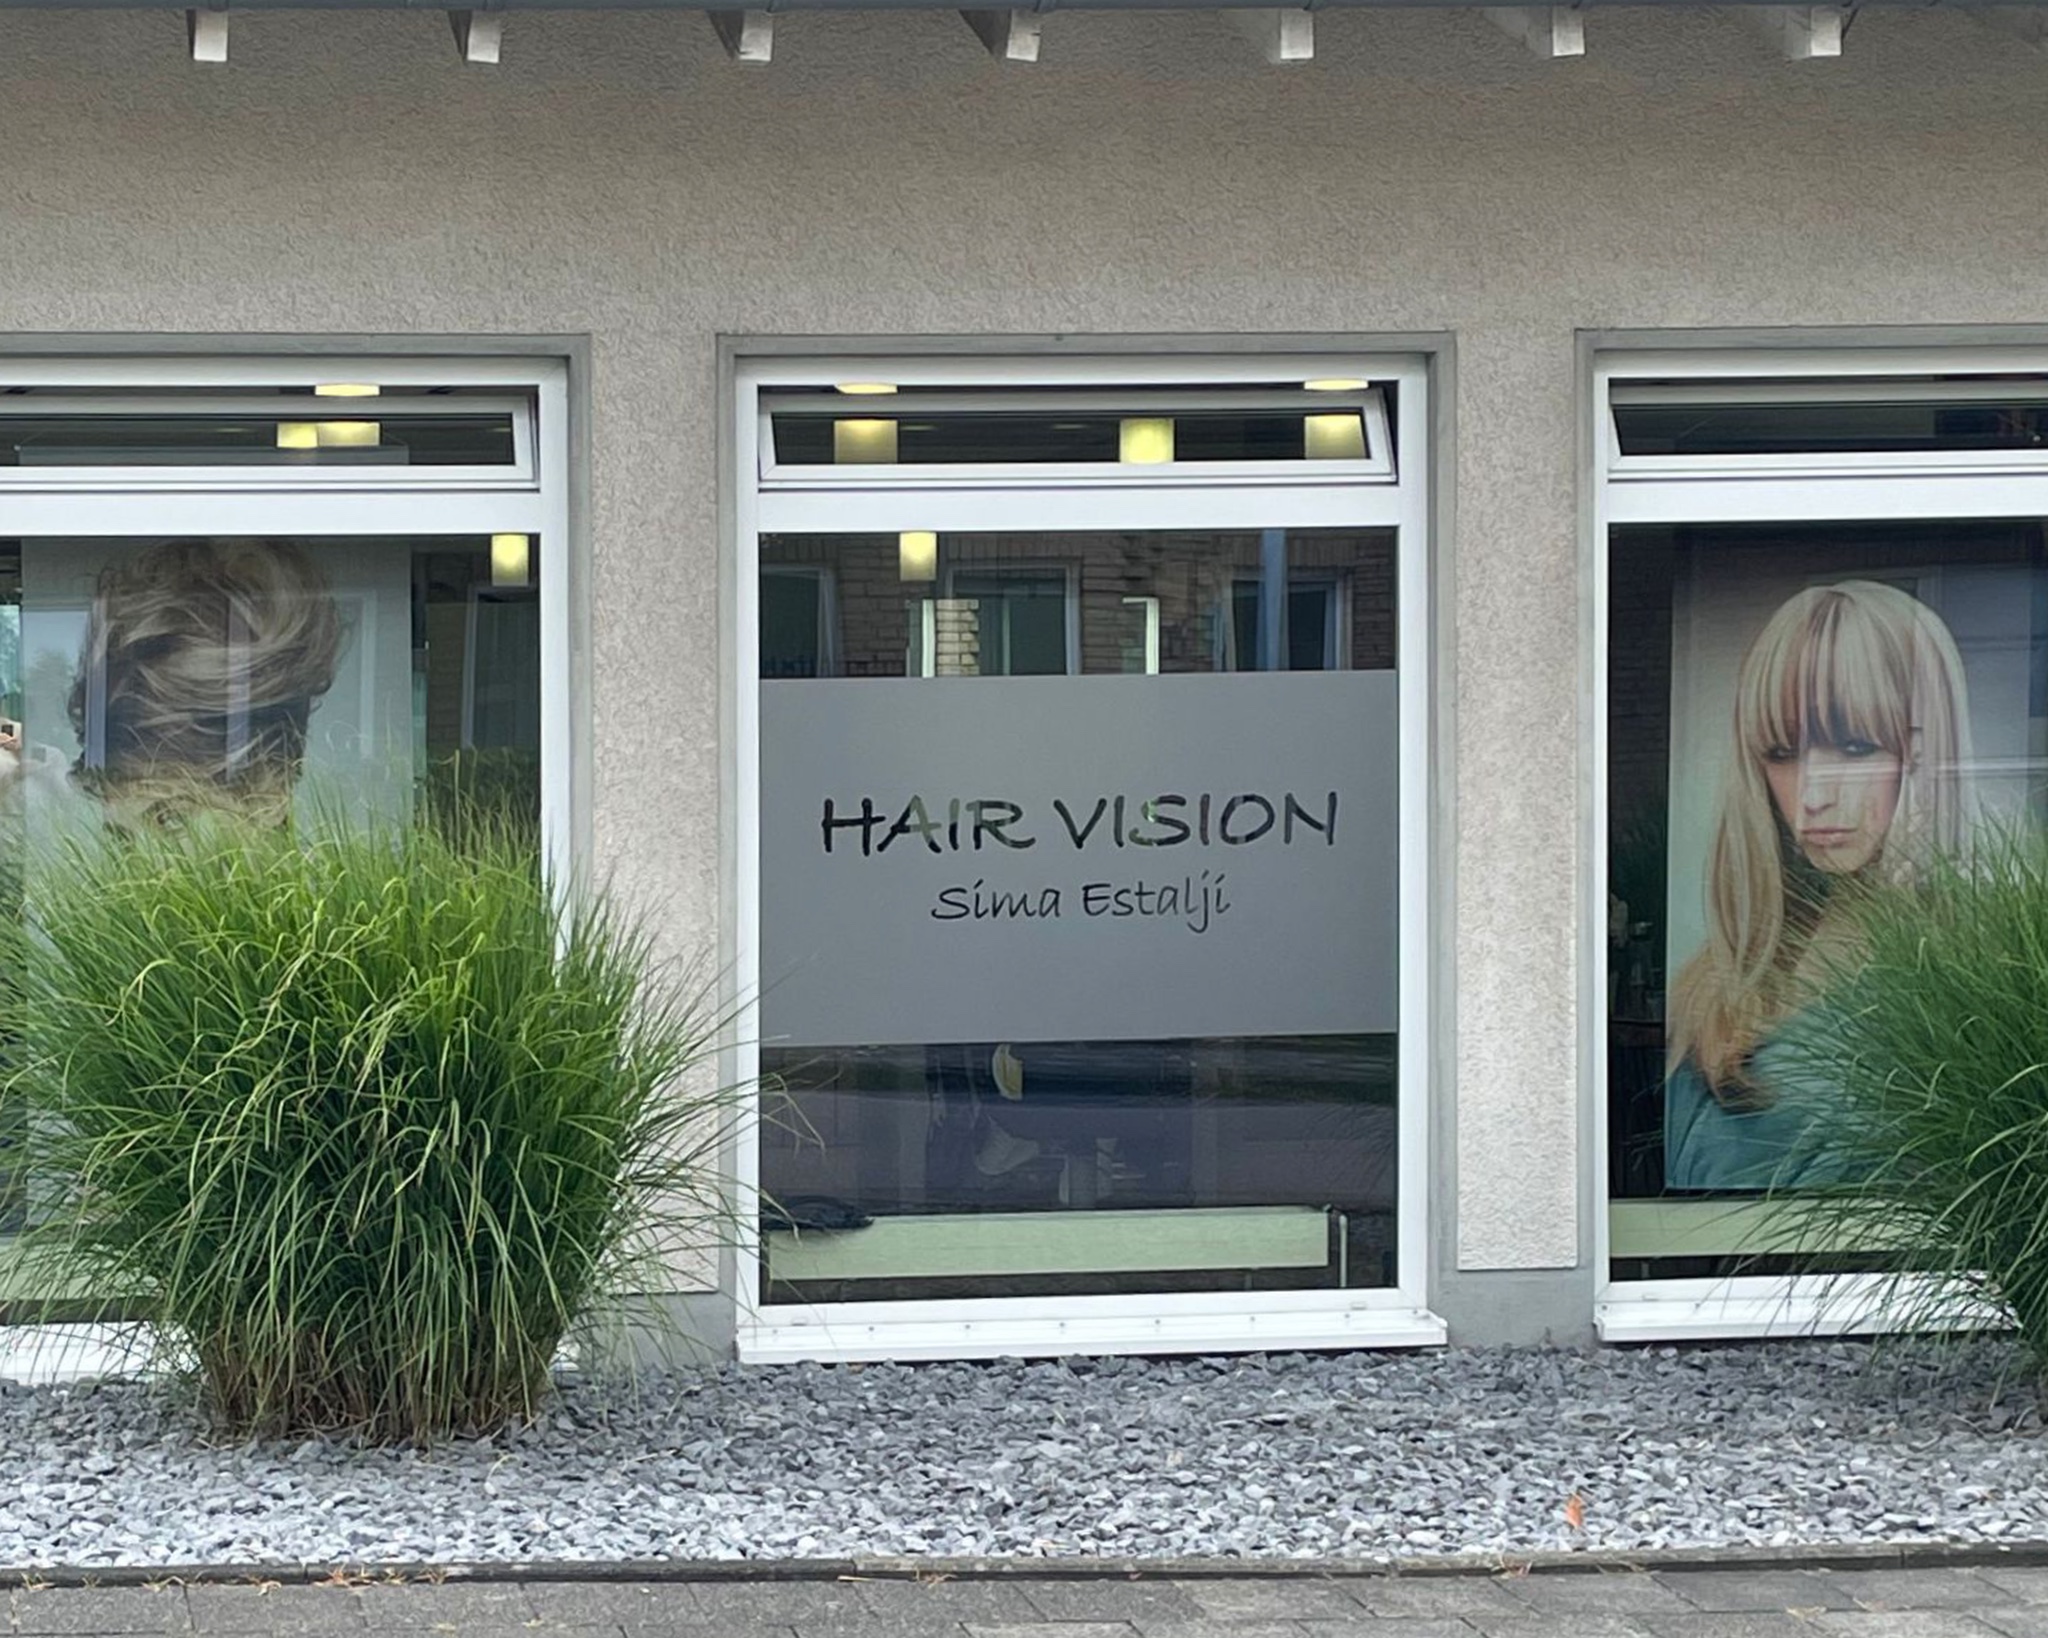 Hair Vision Ihr Salon